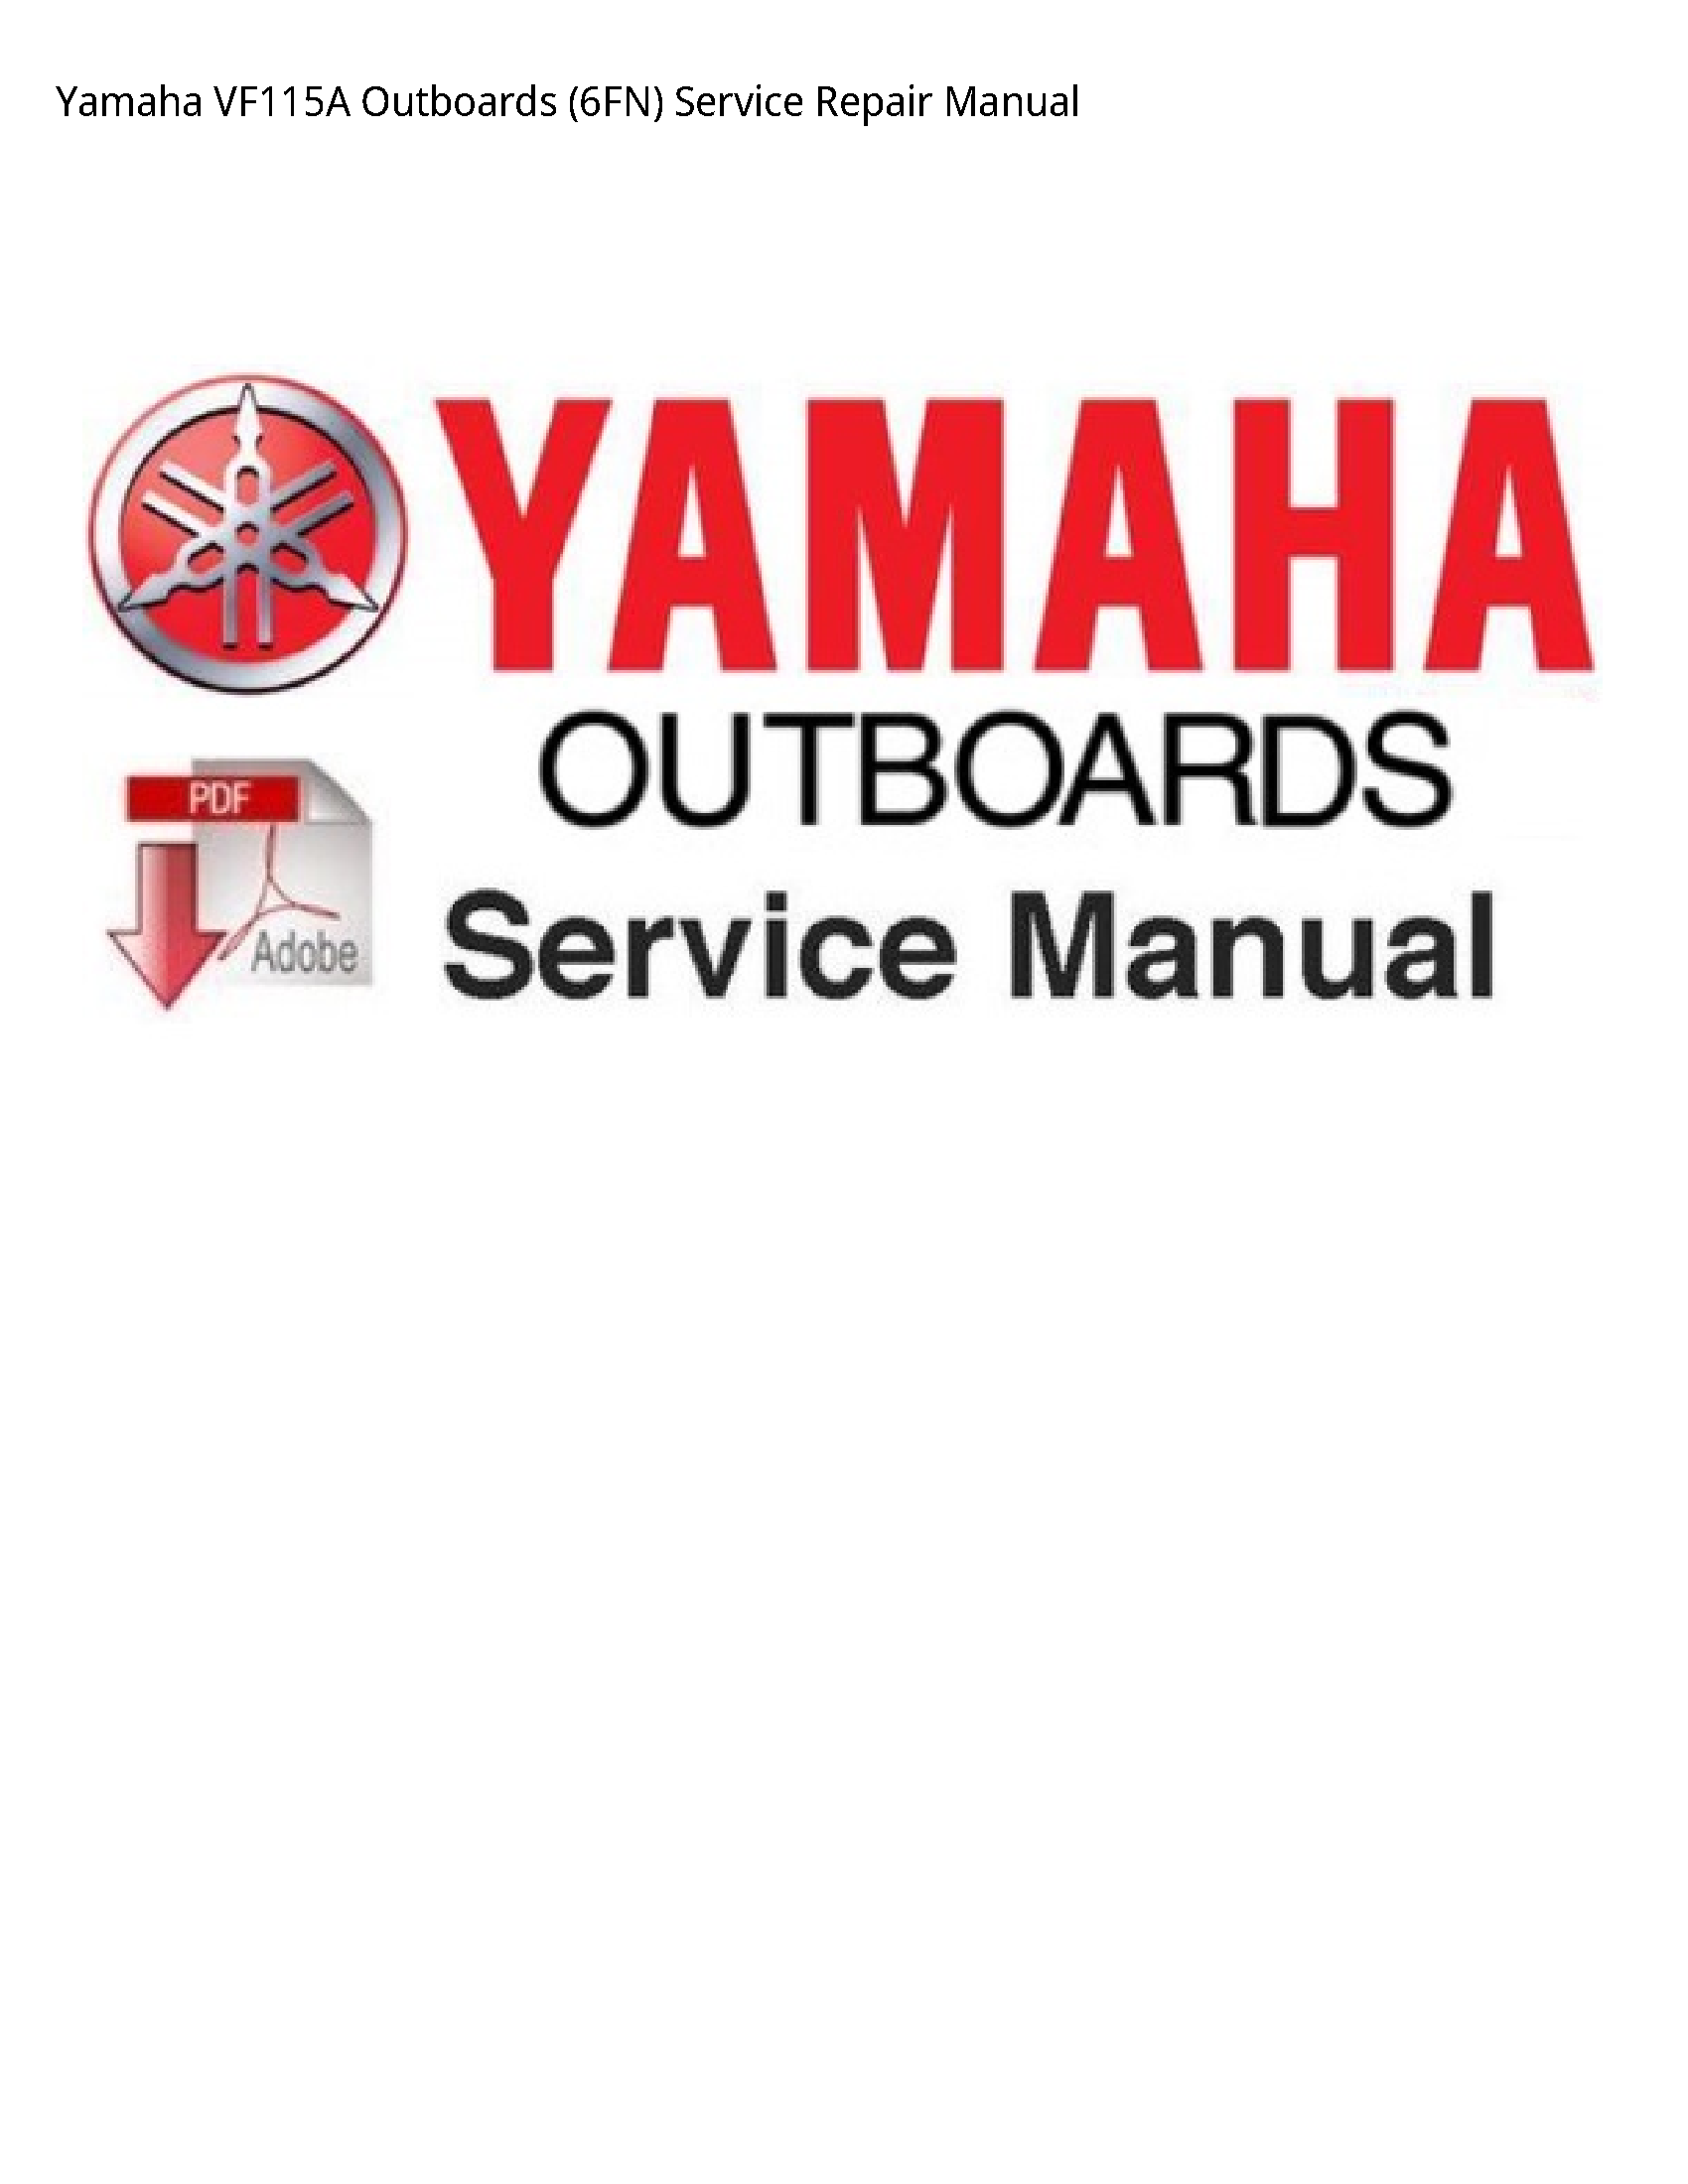 Yamaha VF115A Outboards manual